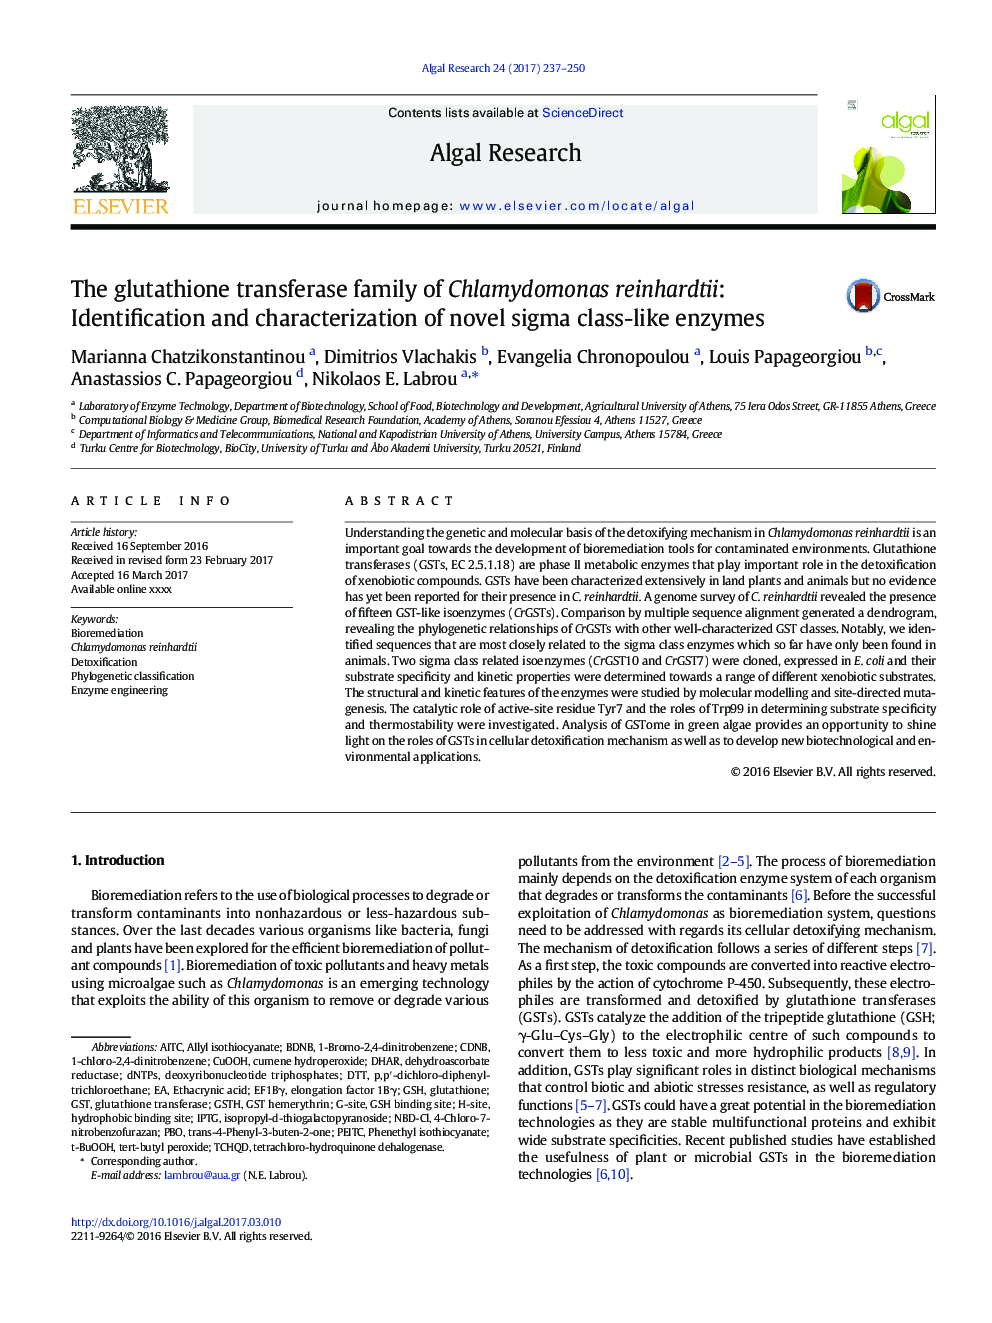 The glutathione transferase family of Chlamydomonas reinhardtii: Identification and characterization of novel sigma class-like enzymes